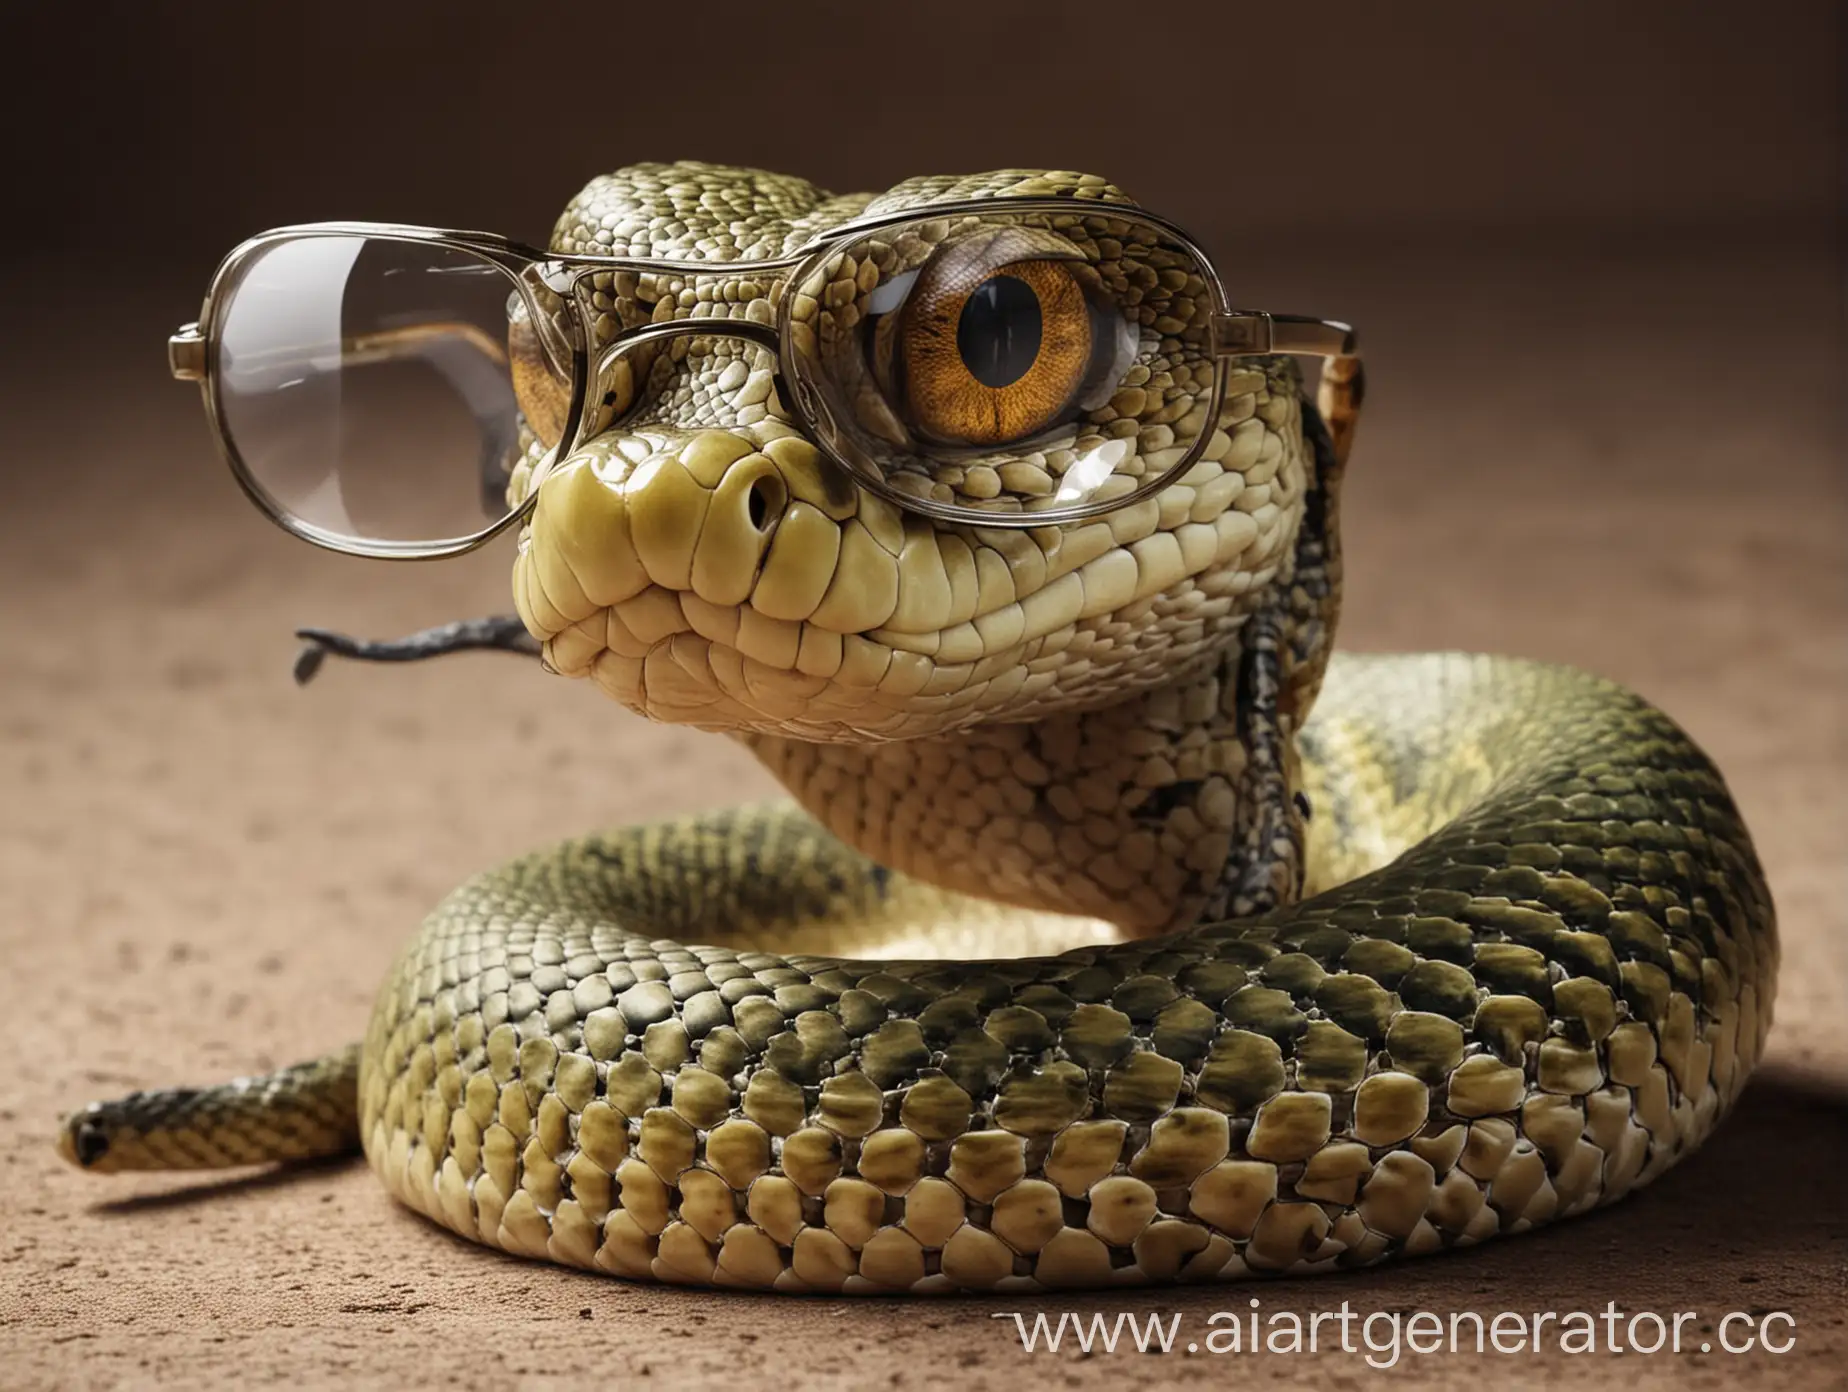 Playful-Snake-Wearing-Glasses